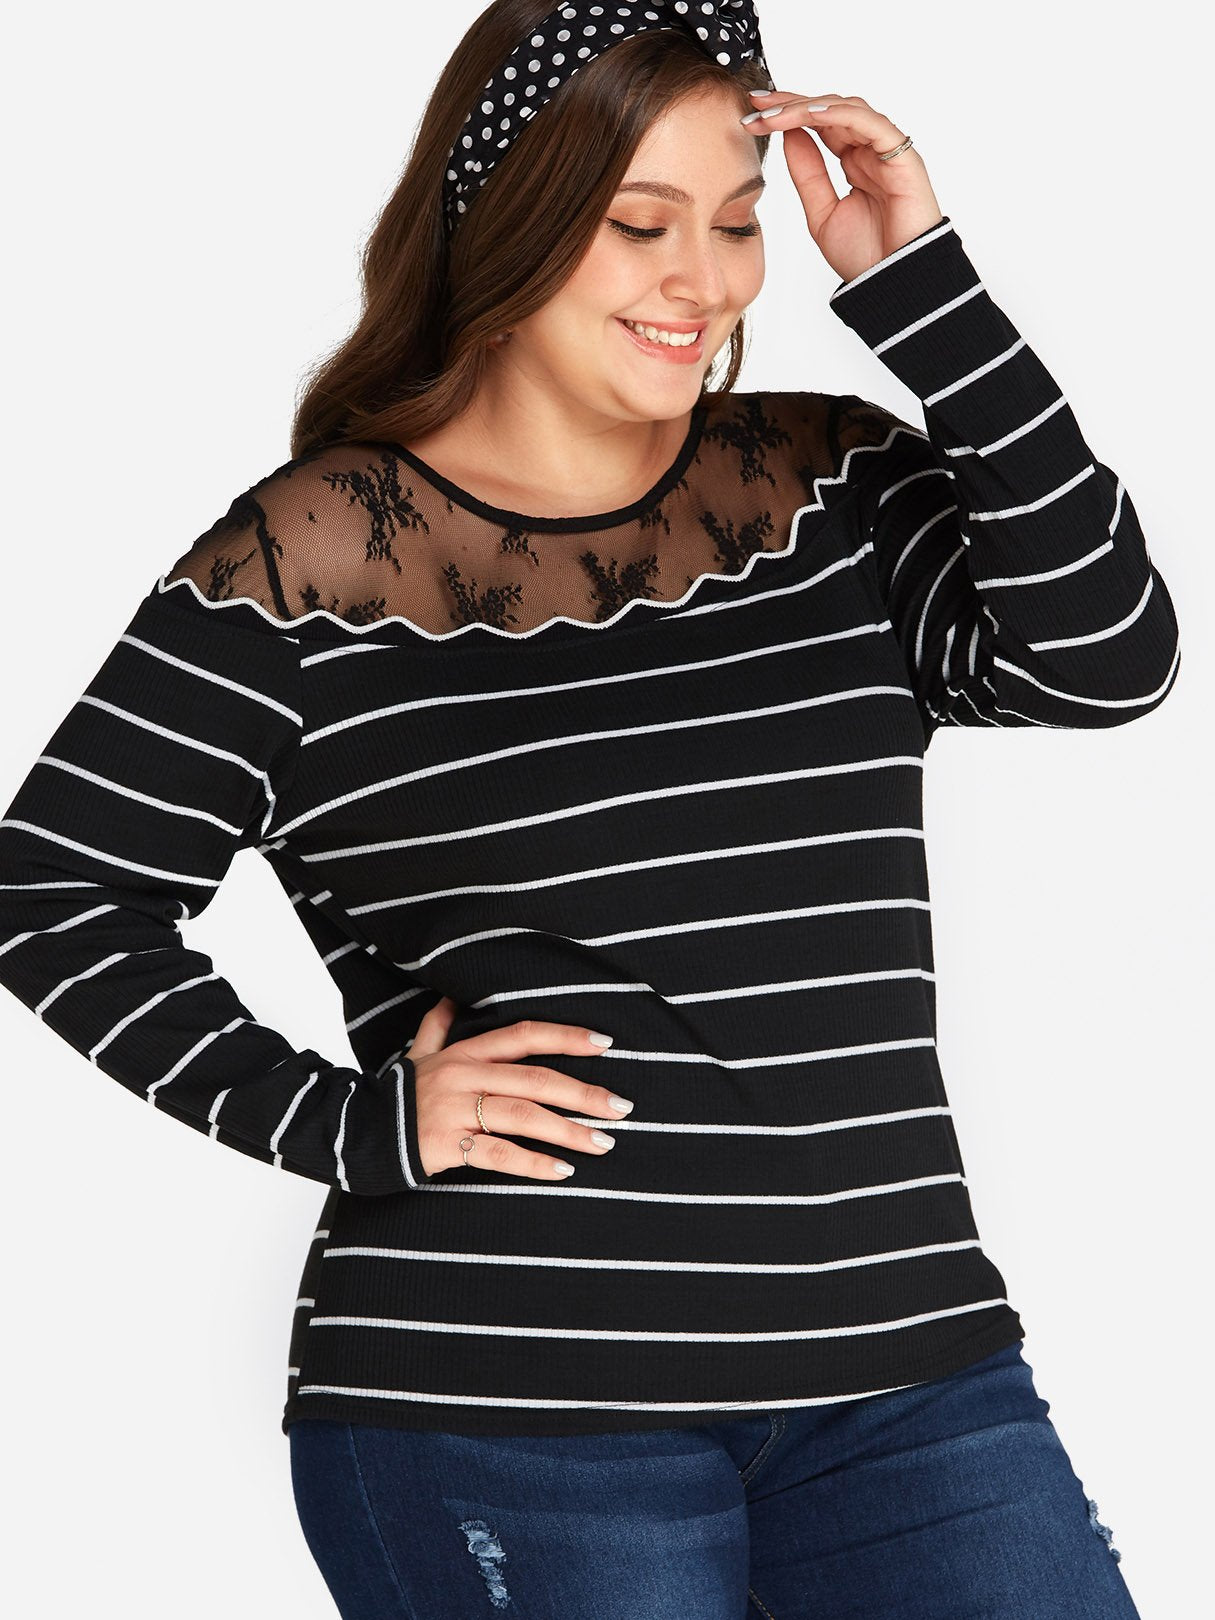 OEM Ladies Striped Plus Size Tops